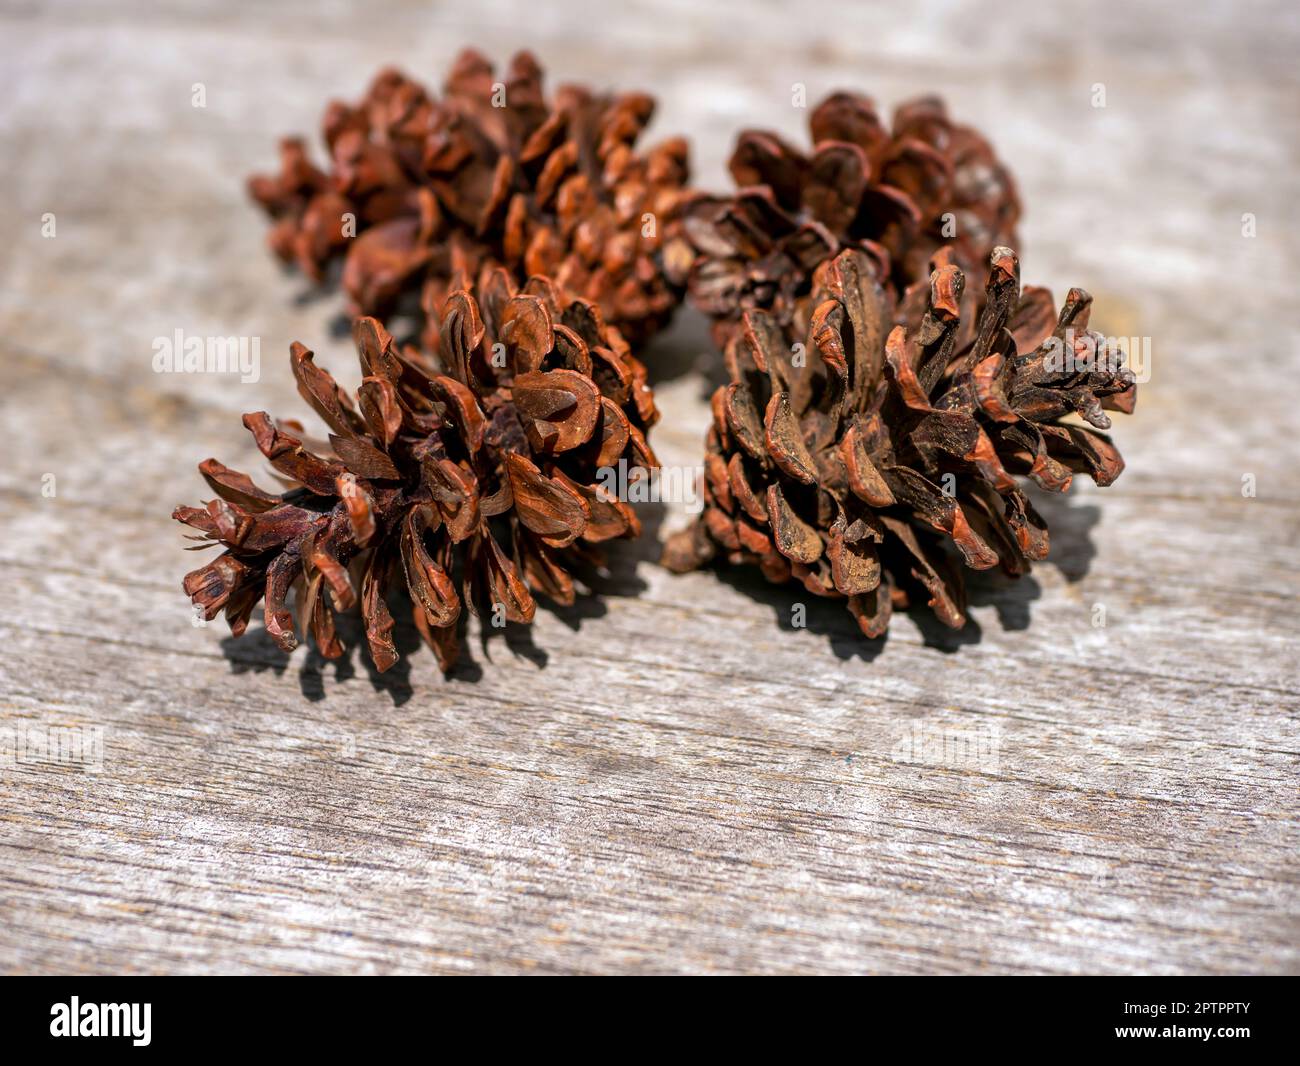 Dried pine cones, Pinus merkusii seeds, shallow focus Stock Photo